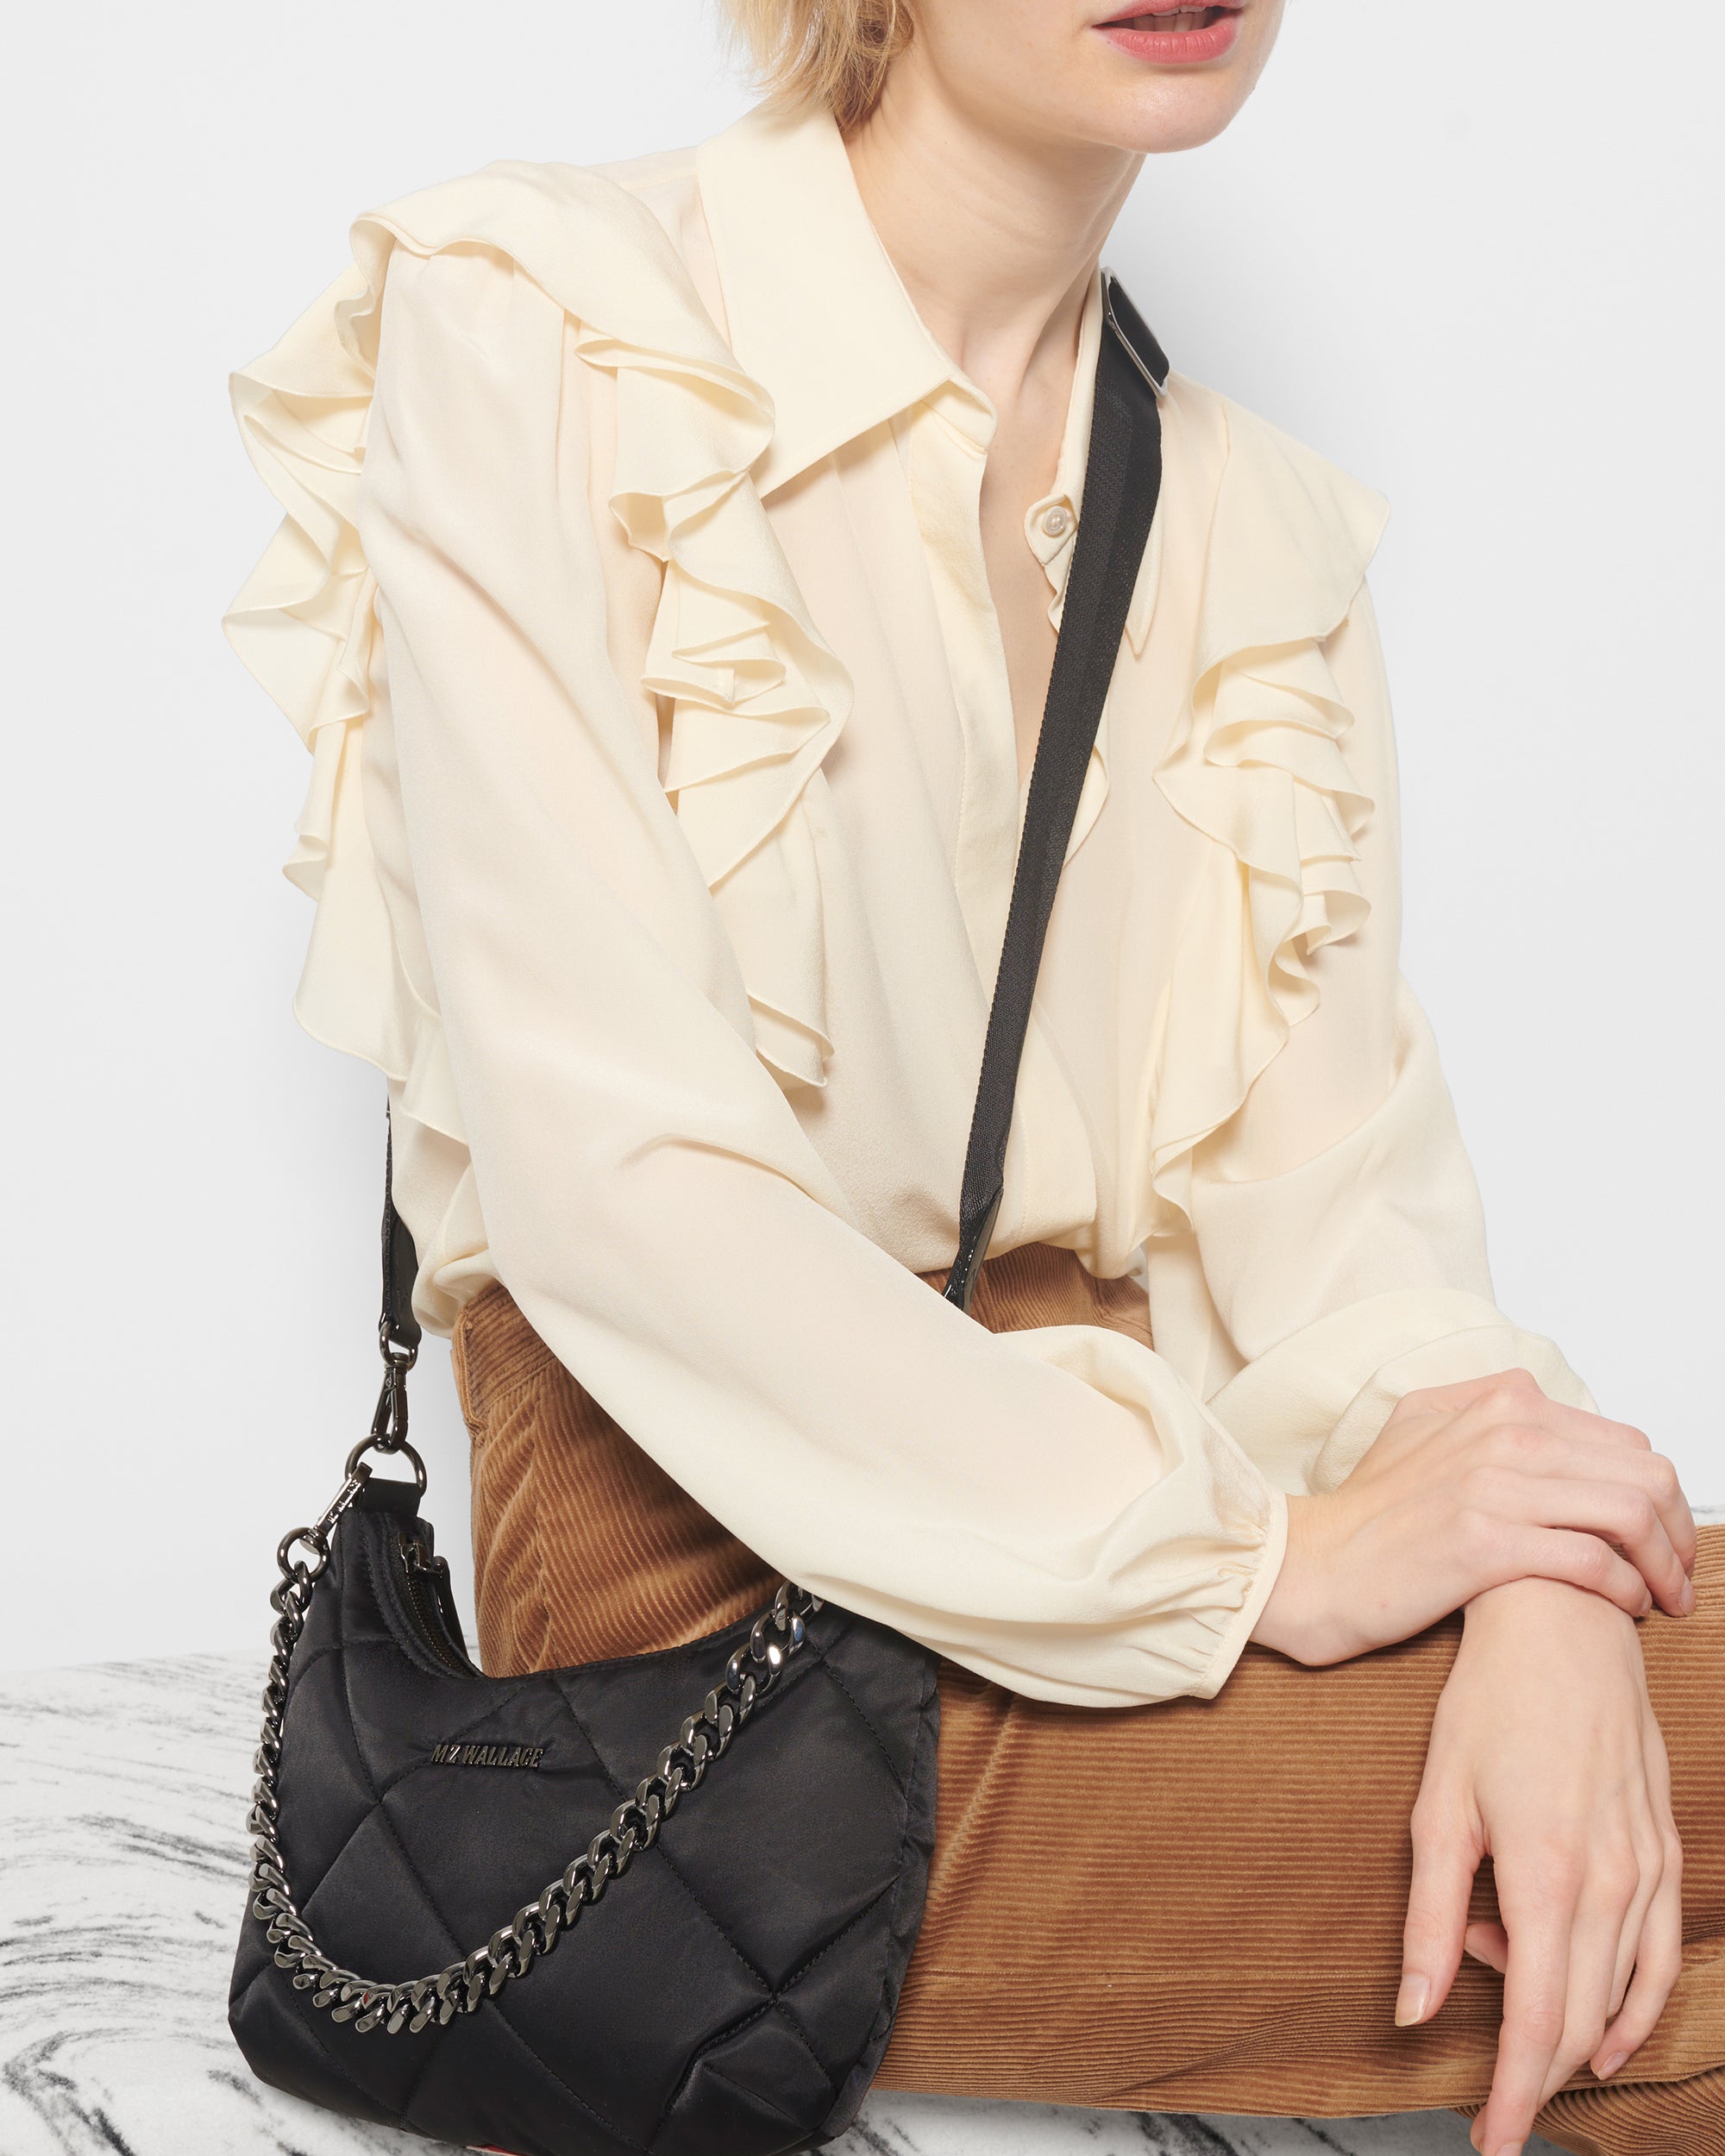 Kate Spade Black Leather Zipper Crossbody Purse Shoulder Bag Cross Body  Small | eBay